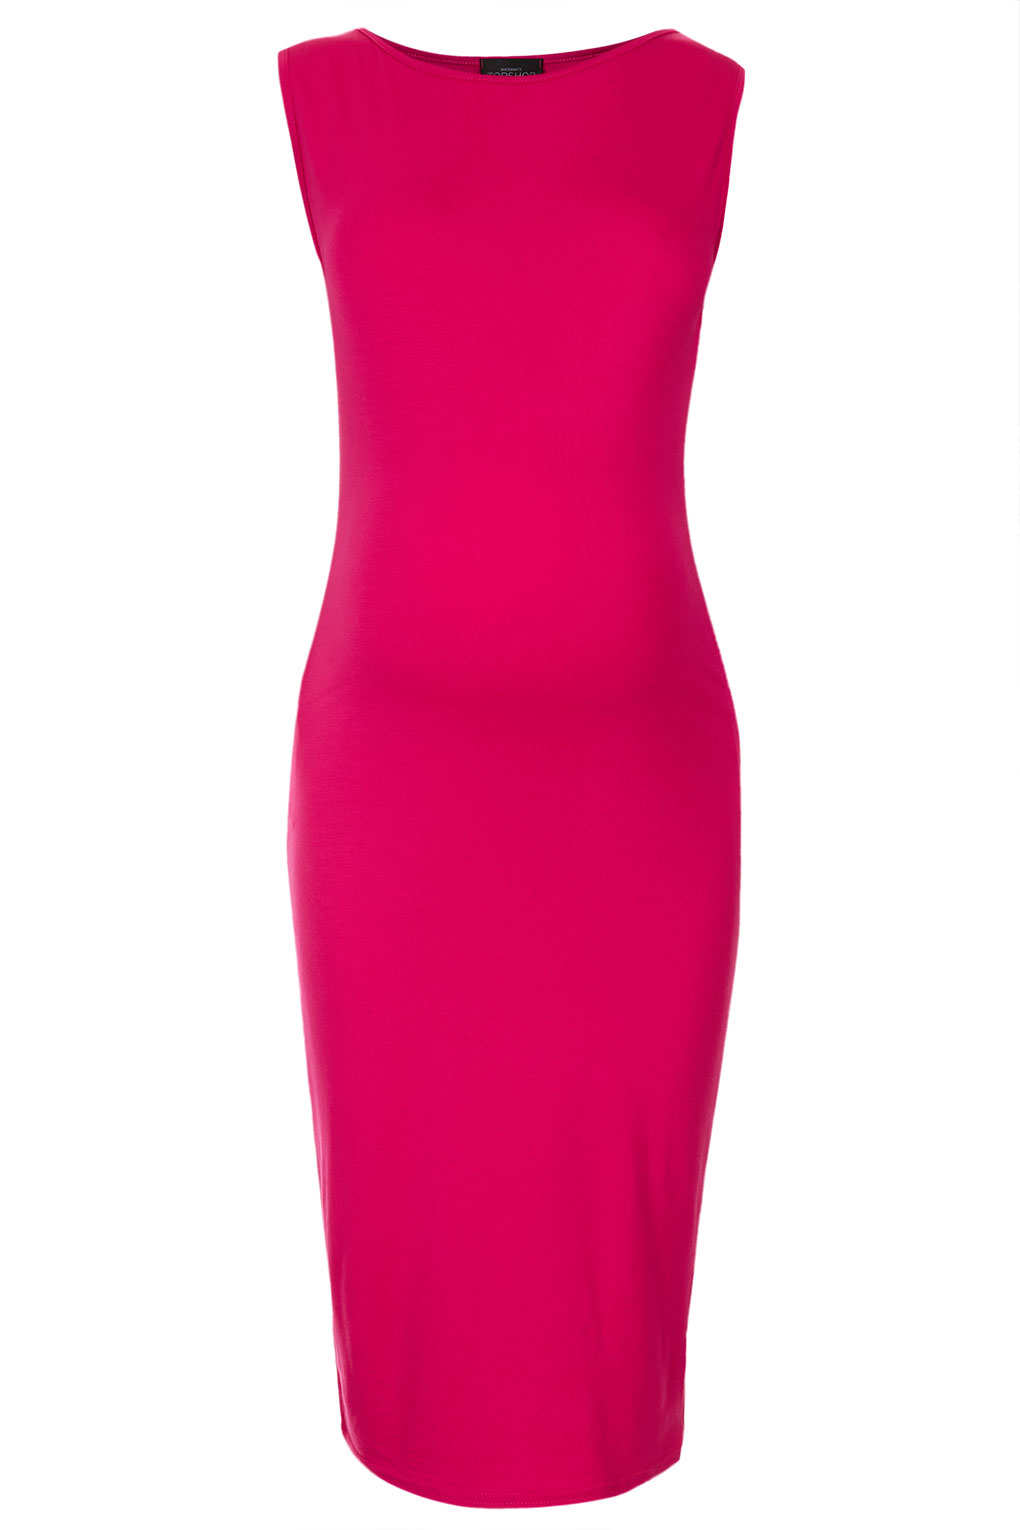 Topshop Maternity Sleevless Midi Dress in Pink | Lyst